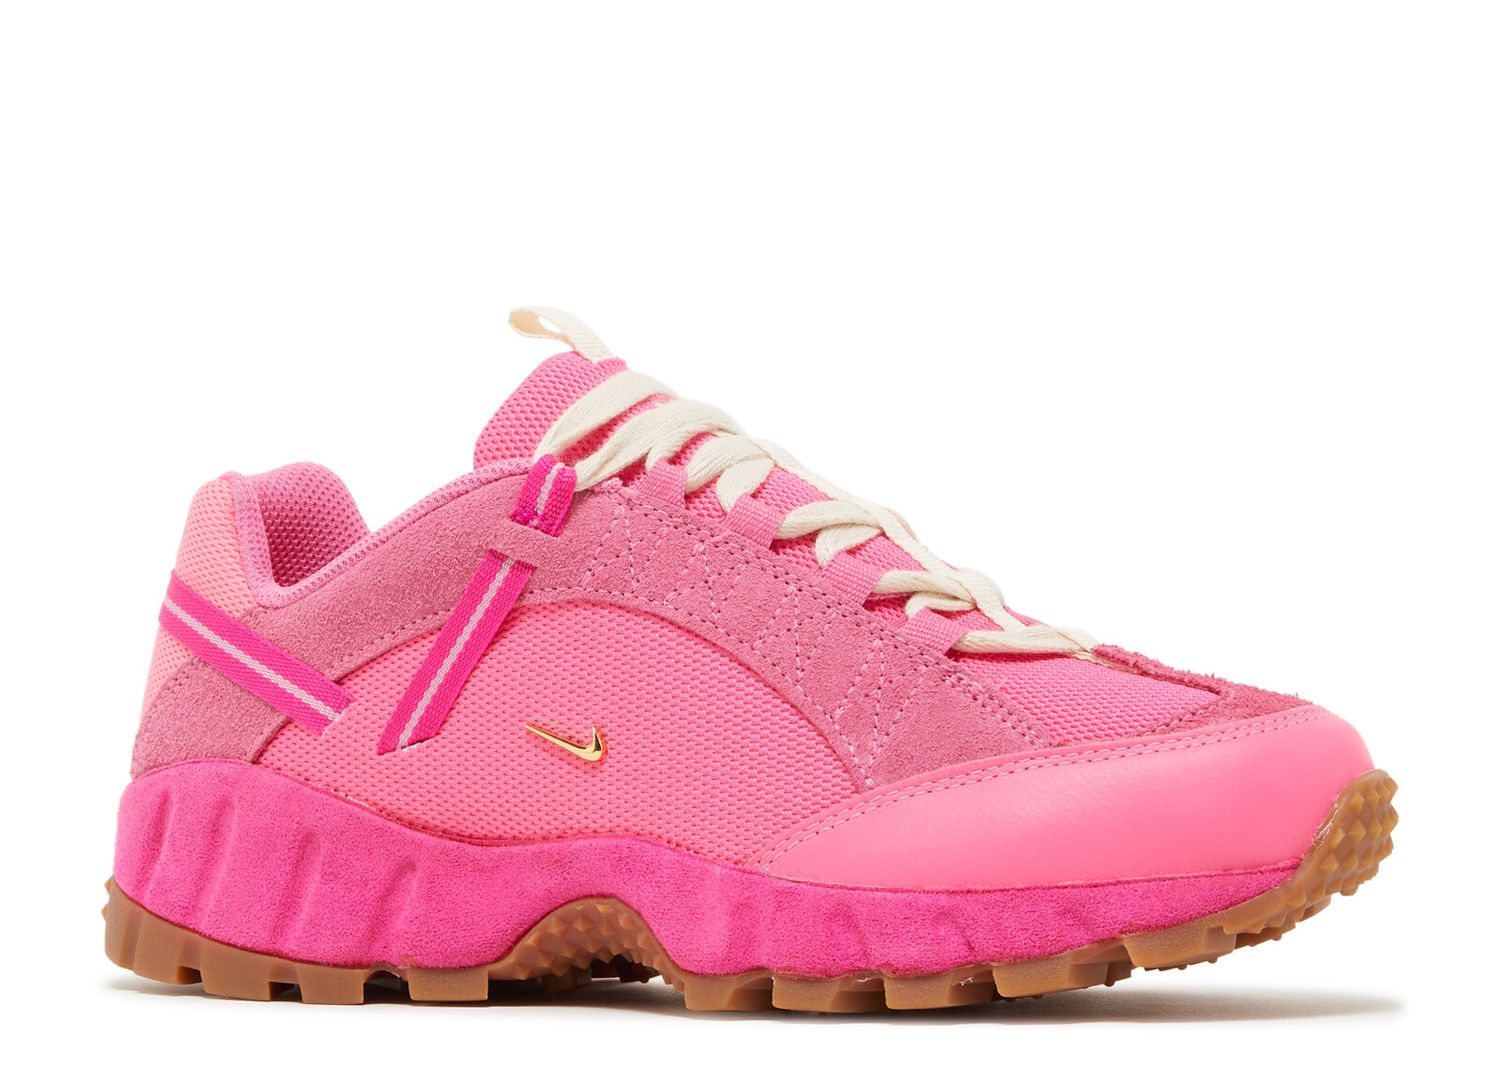 Jacquemus X Wmns Air Humara LX 'Pink Flash' - Nike - DX9999 600 - pink ...